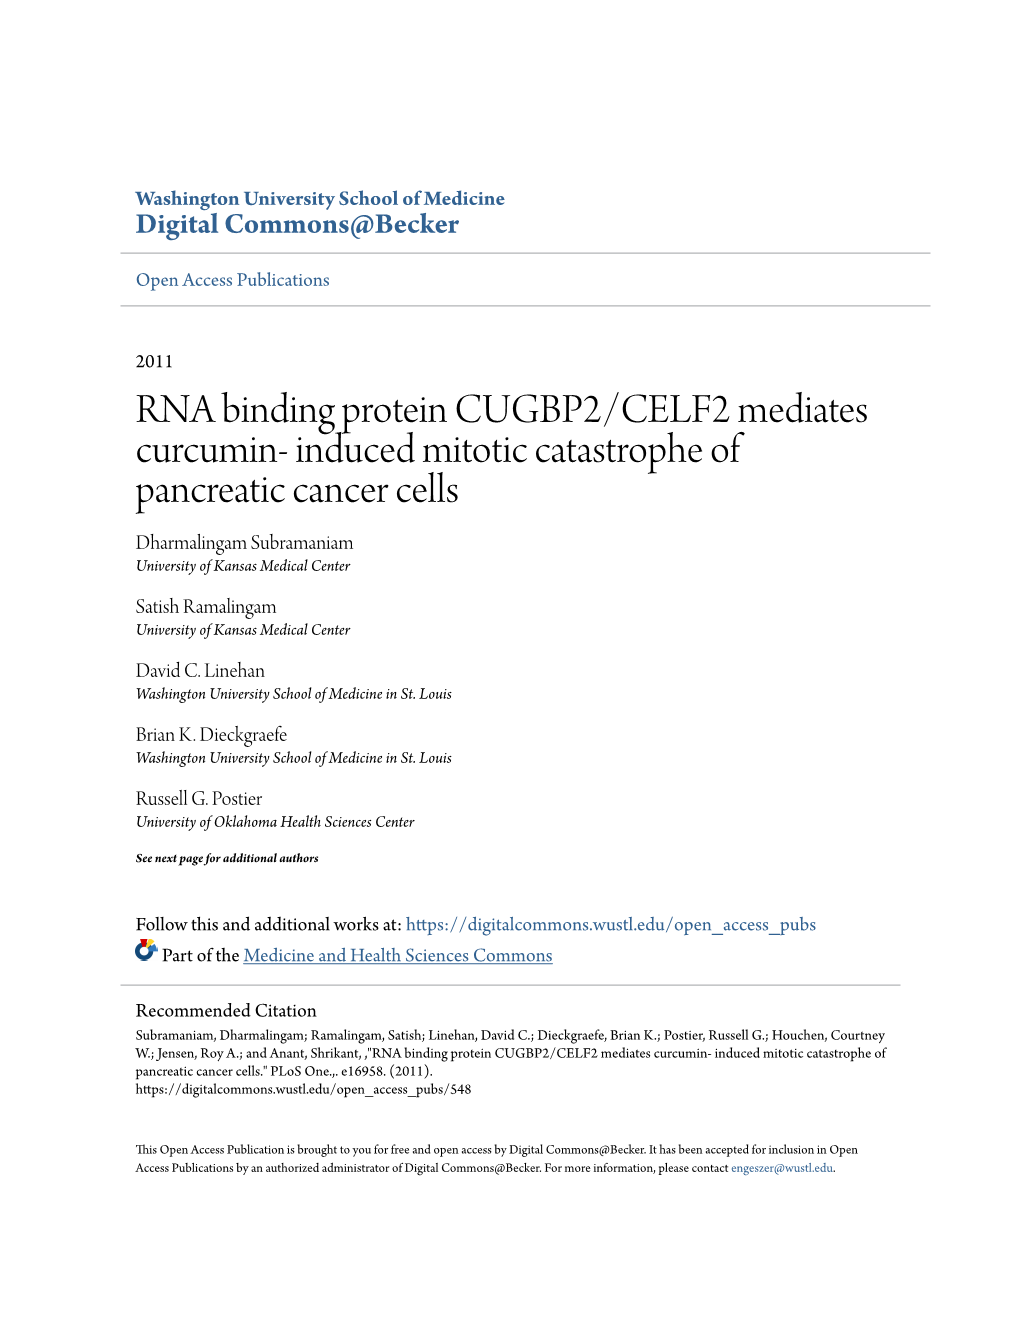 RNA Binding Protein CUGBP2/CELF2 Mediates Curcumin- Induced Mitotic